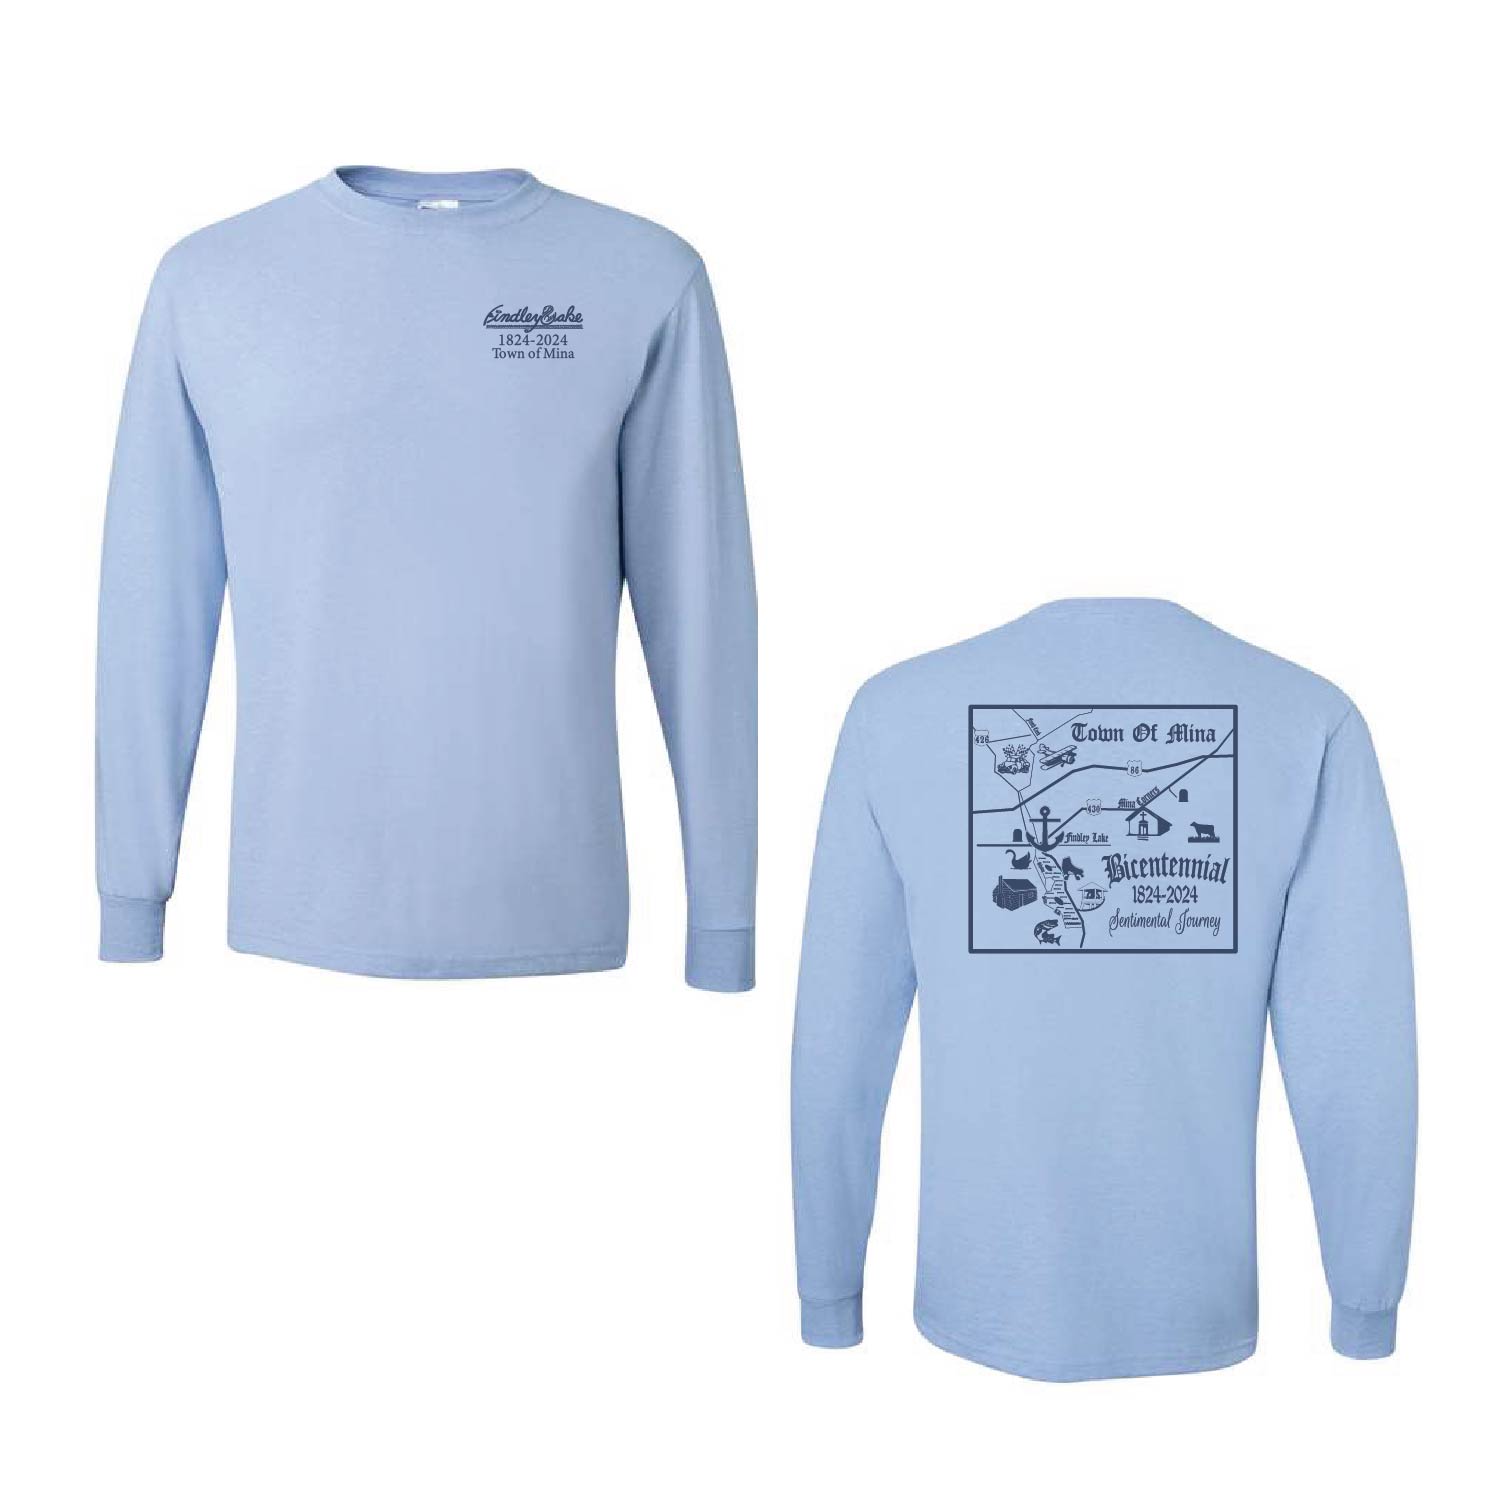 Town of Mina Bicentennial – Cotton Long Sleeve Shirt product image